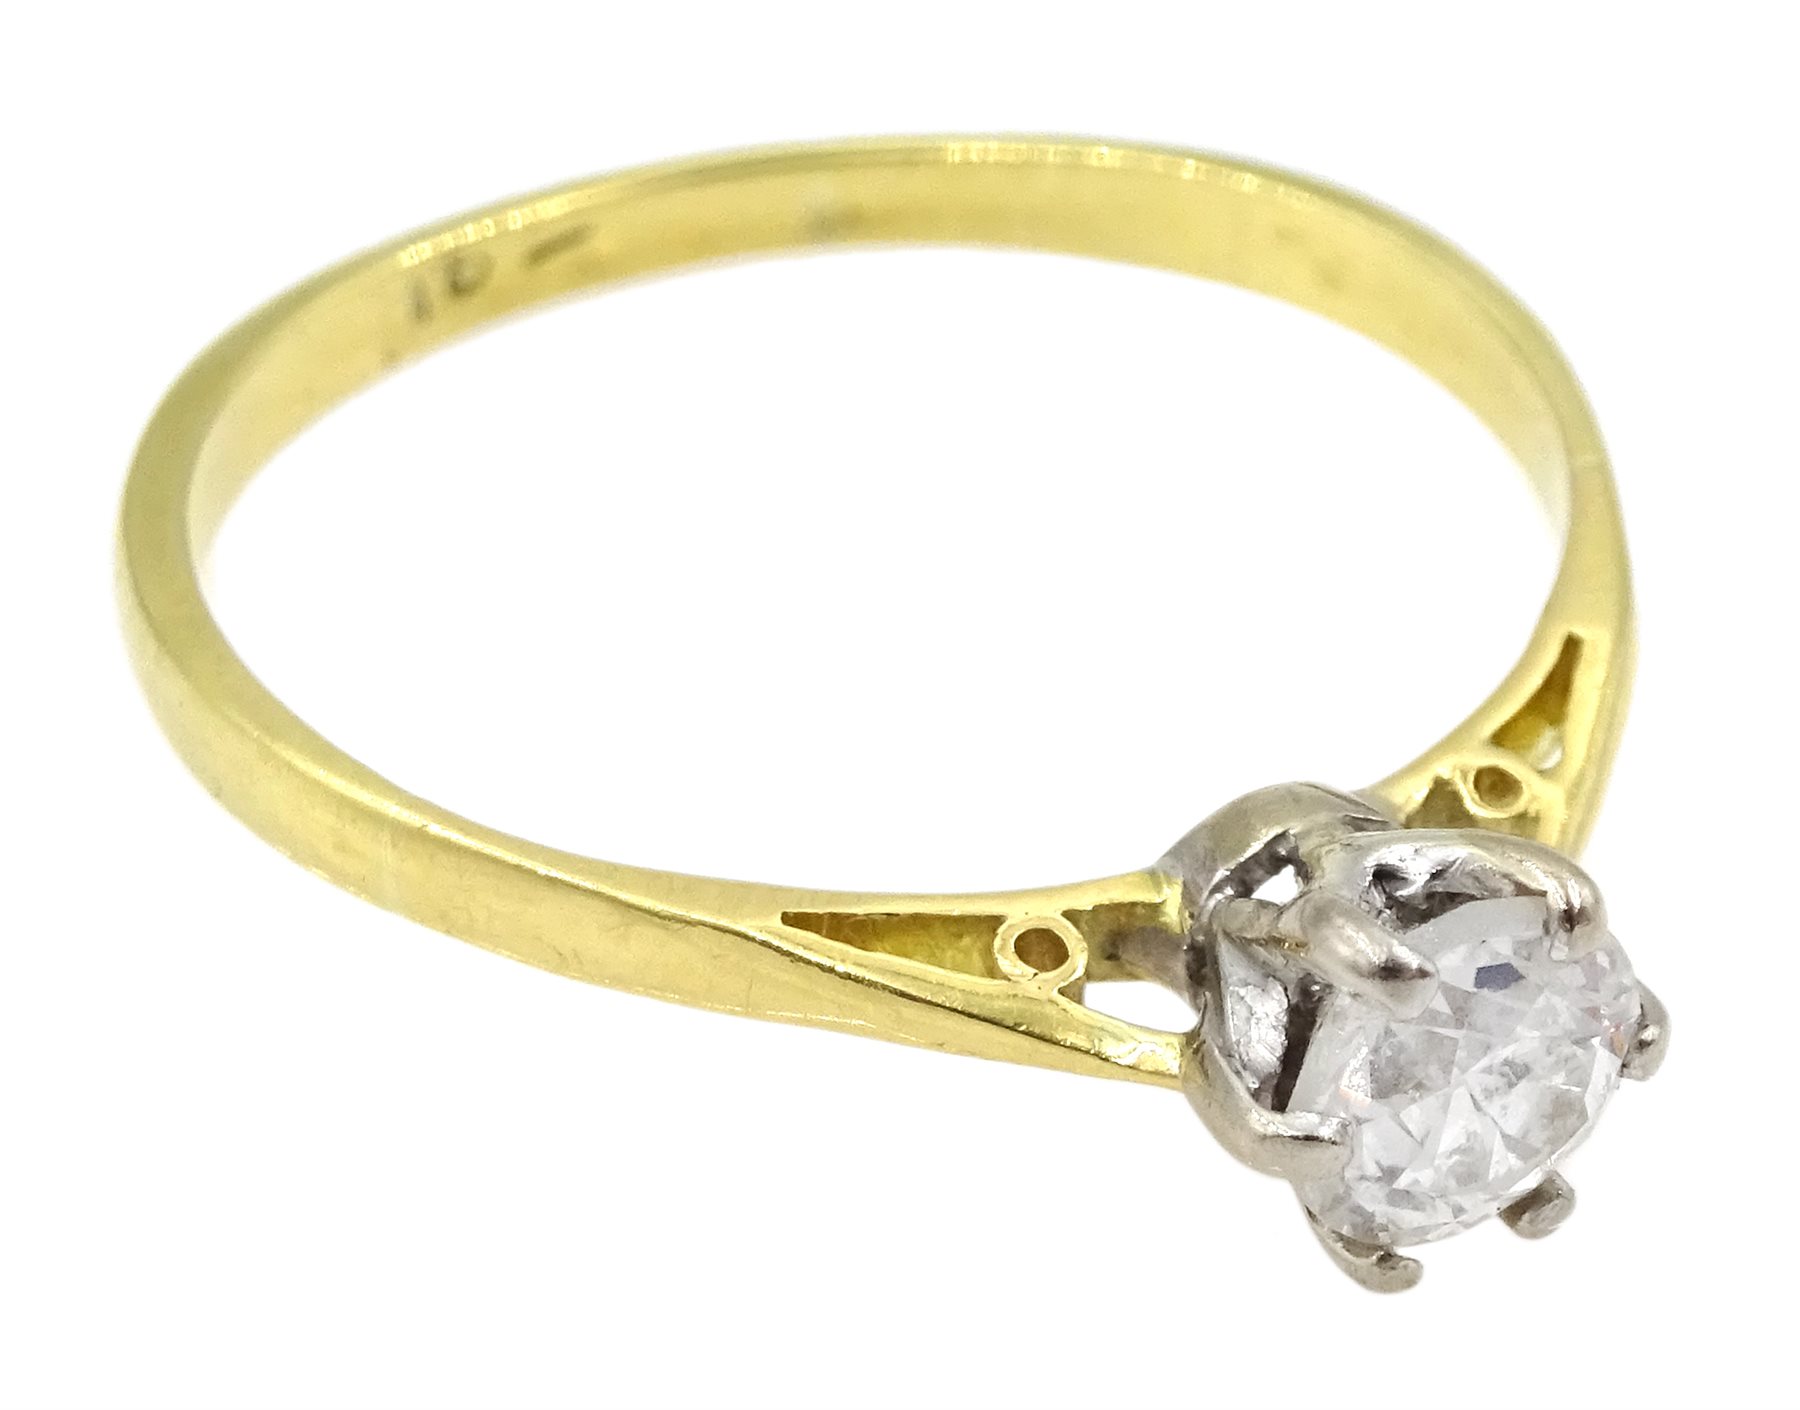 Gold single stone diamond ring, stamped 18, diamond approx 0.30 carat - Image 2 of 3